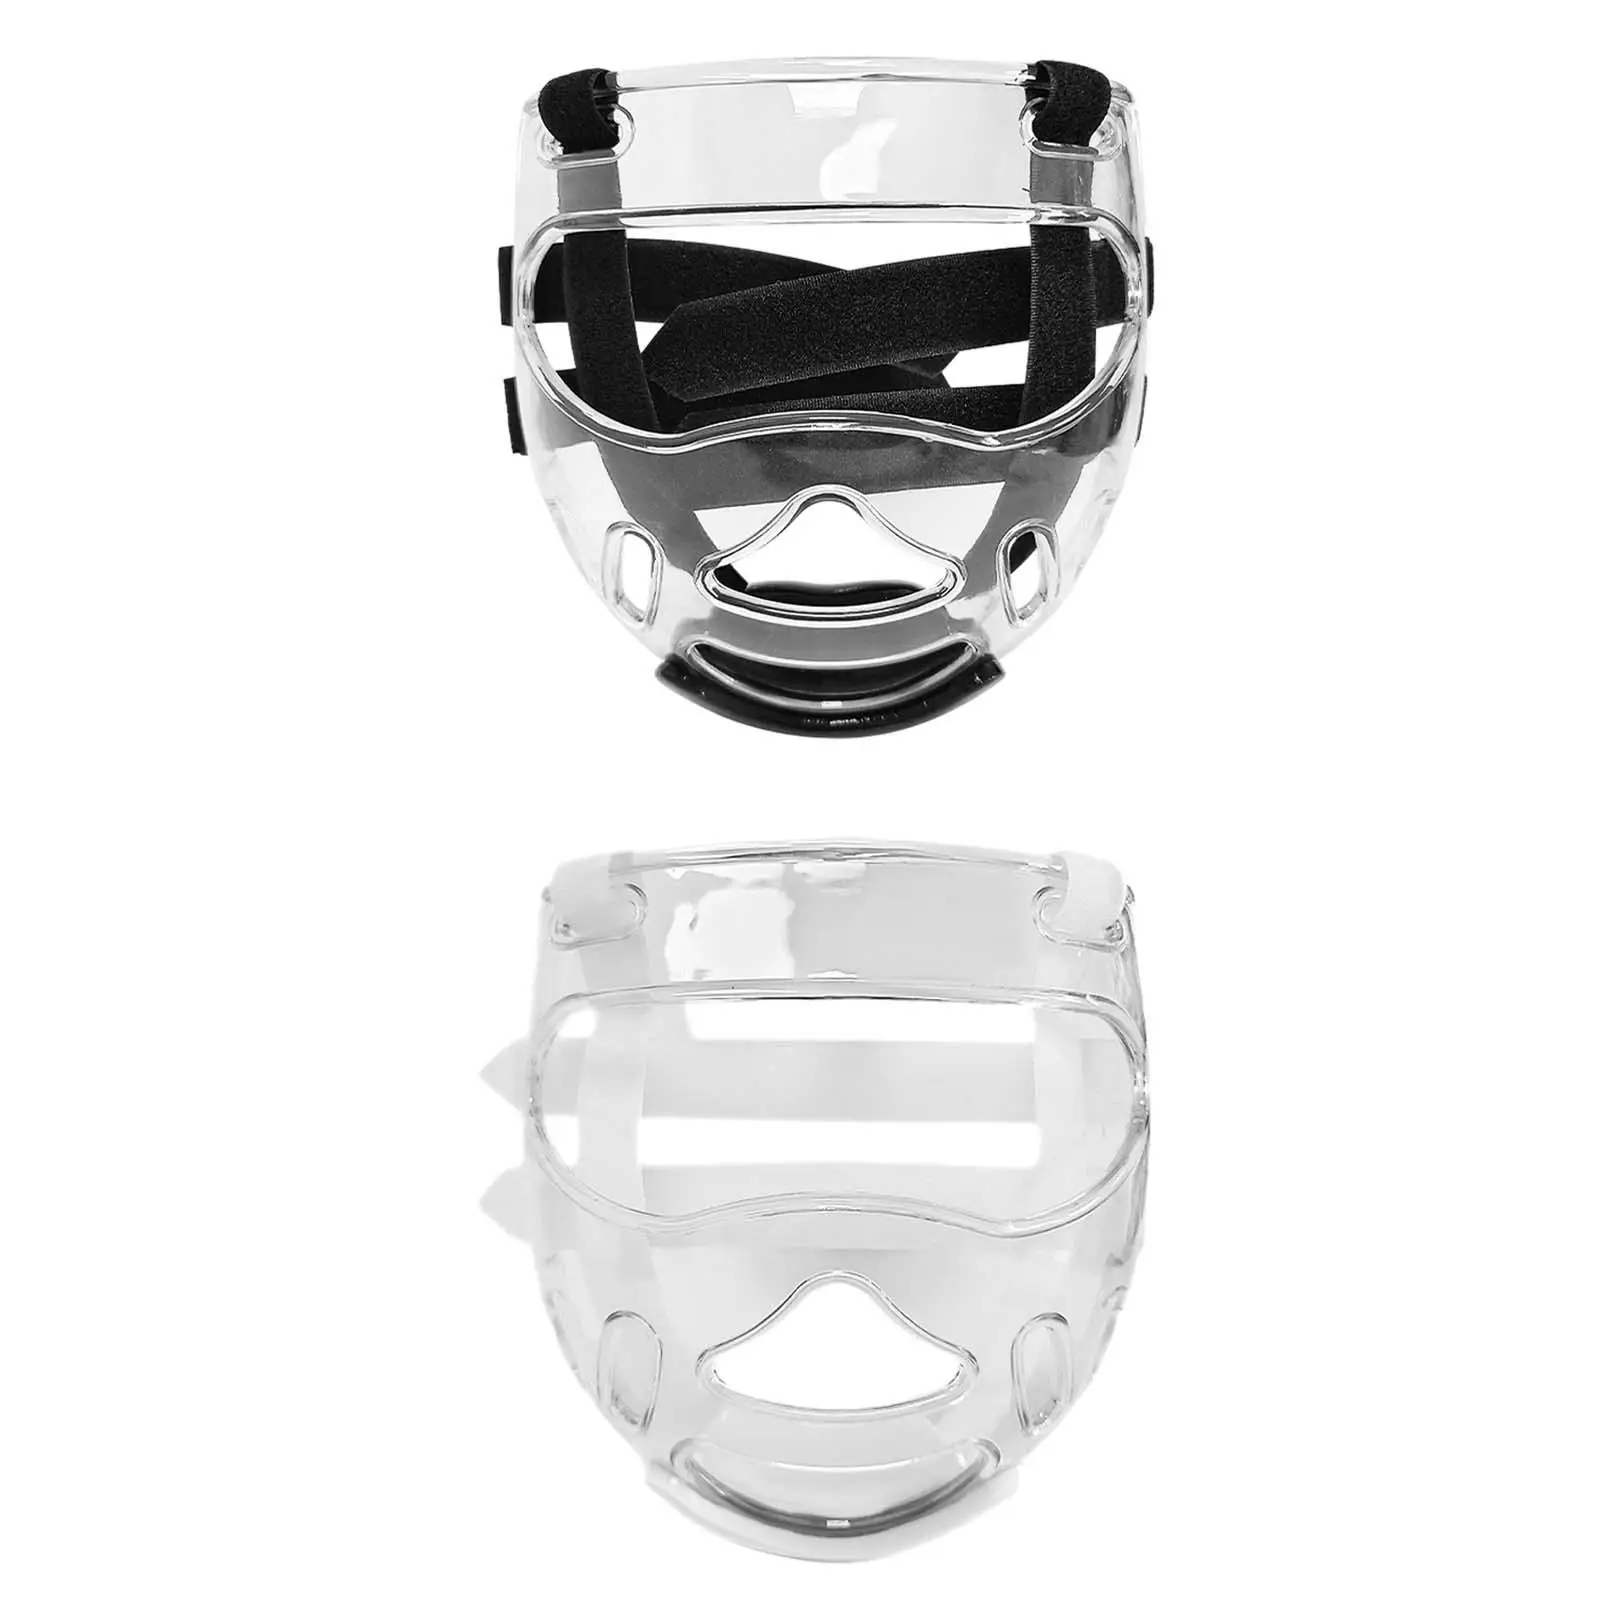 Taekwondo Mask Taekwondo Face Shield Detachable Sparring Mask Clear Face Guard for Grappling Karate Wrestling Sports Kickboxing